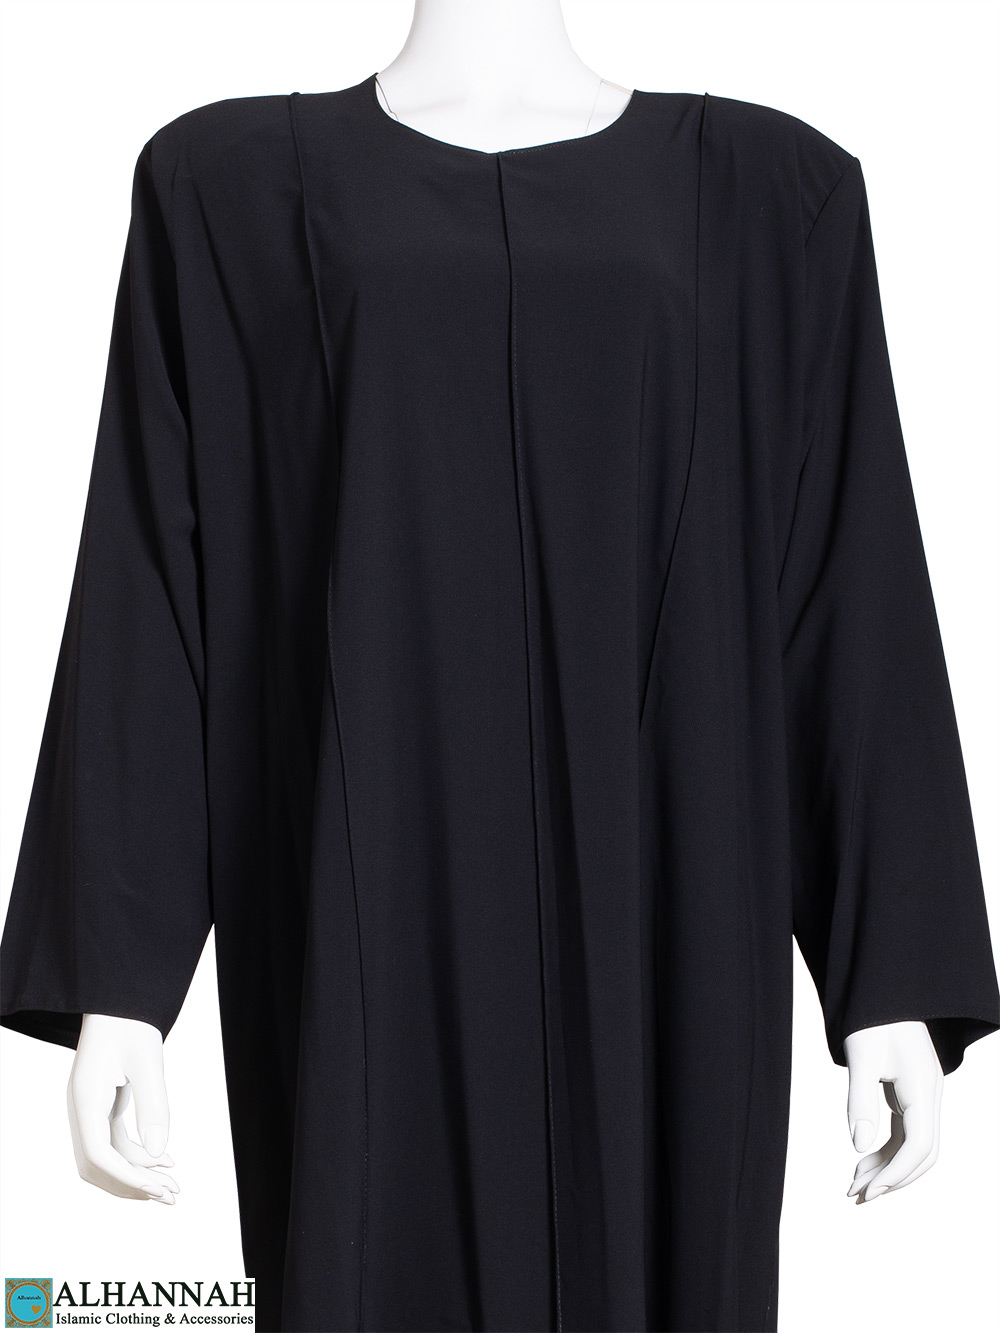 Pleated Black Abaya | ab811 » Alhannah Islamic Clothing